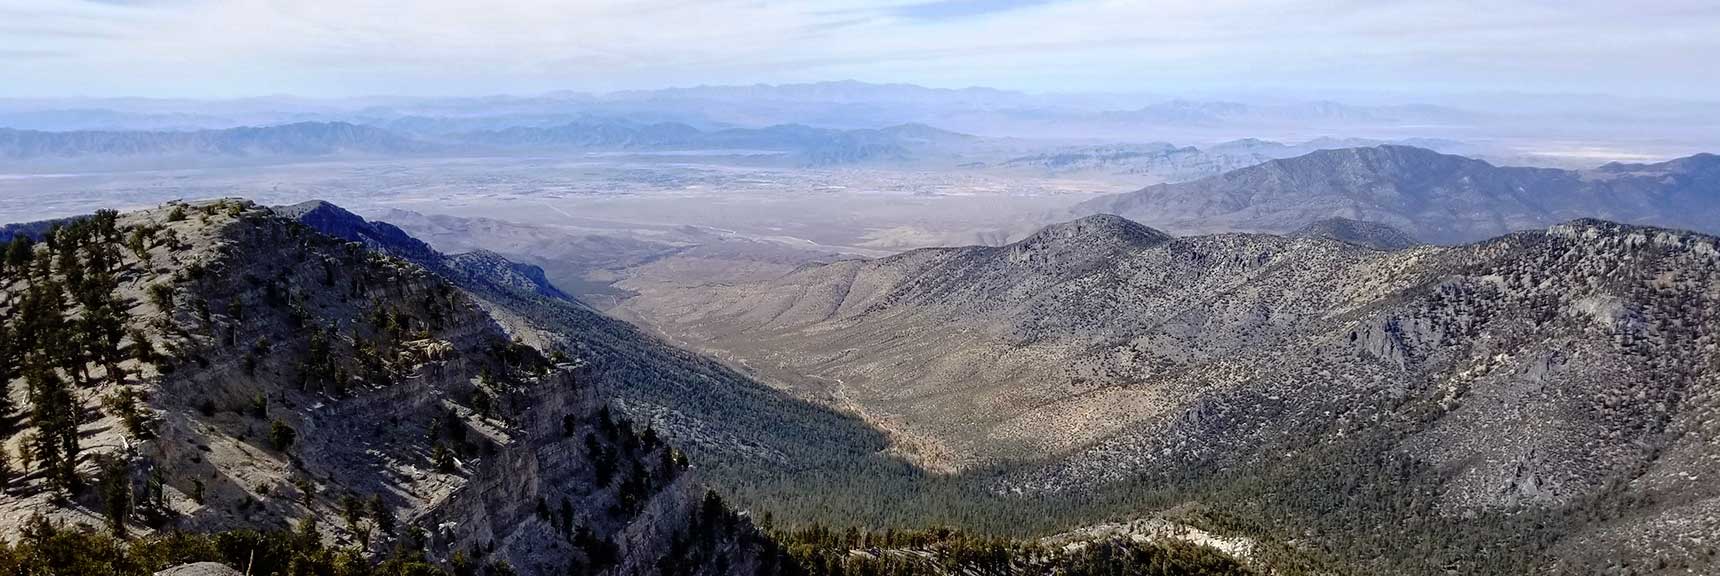 Pahrump and Telescope Peak Viewed from Lee Peak in Kyle Canyon, Spring Mountains, Nevada Slide 001